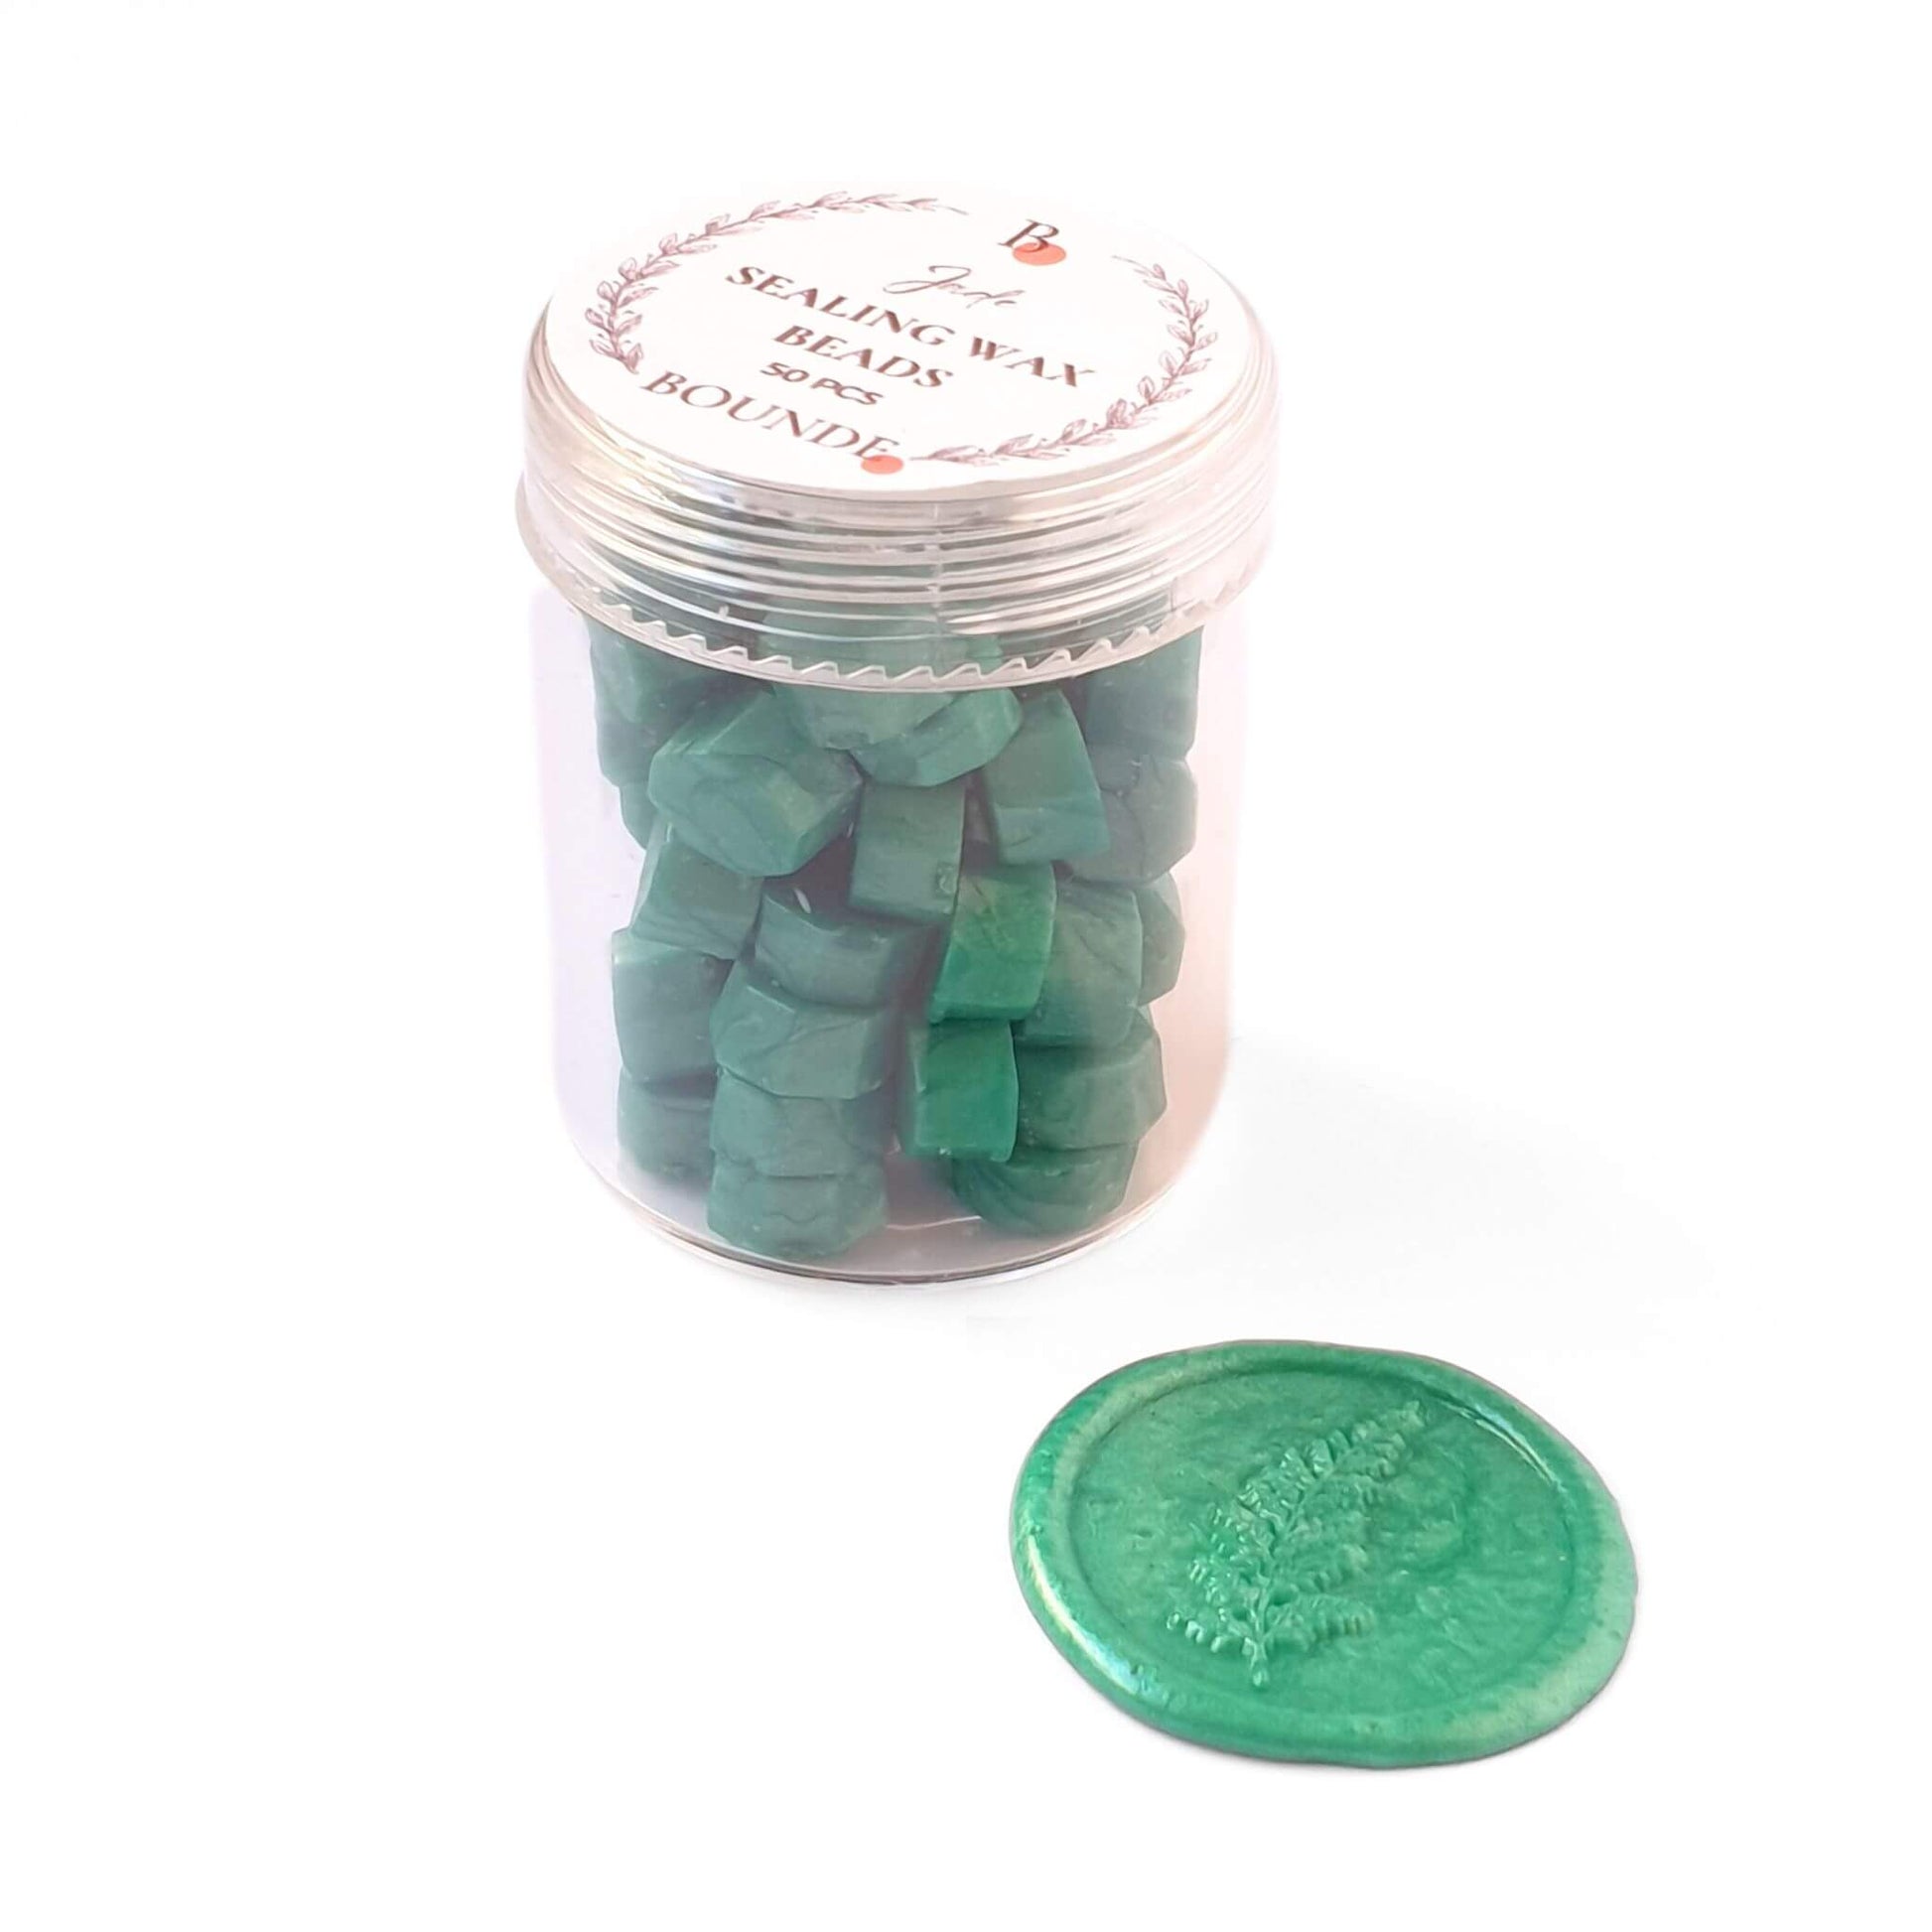 jade green wax sealing beads in jar with fern leaf wax seal in green